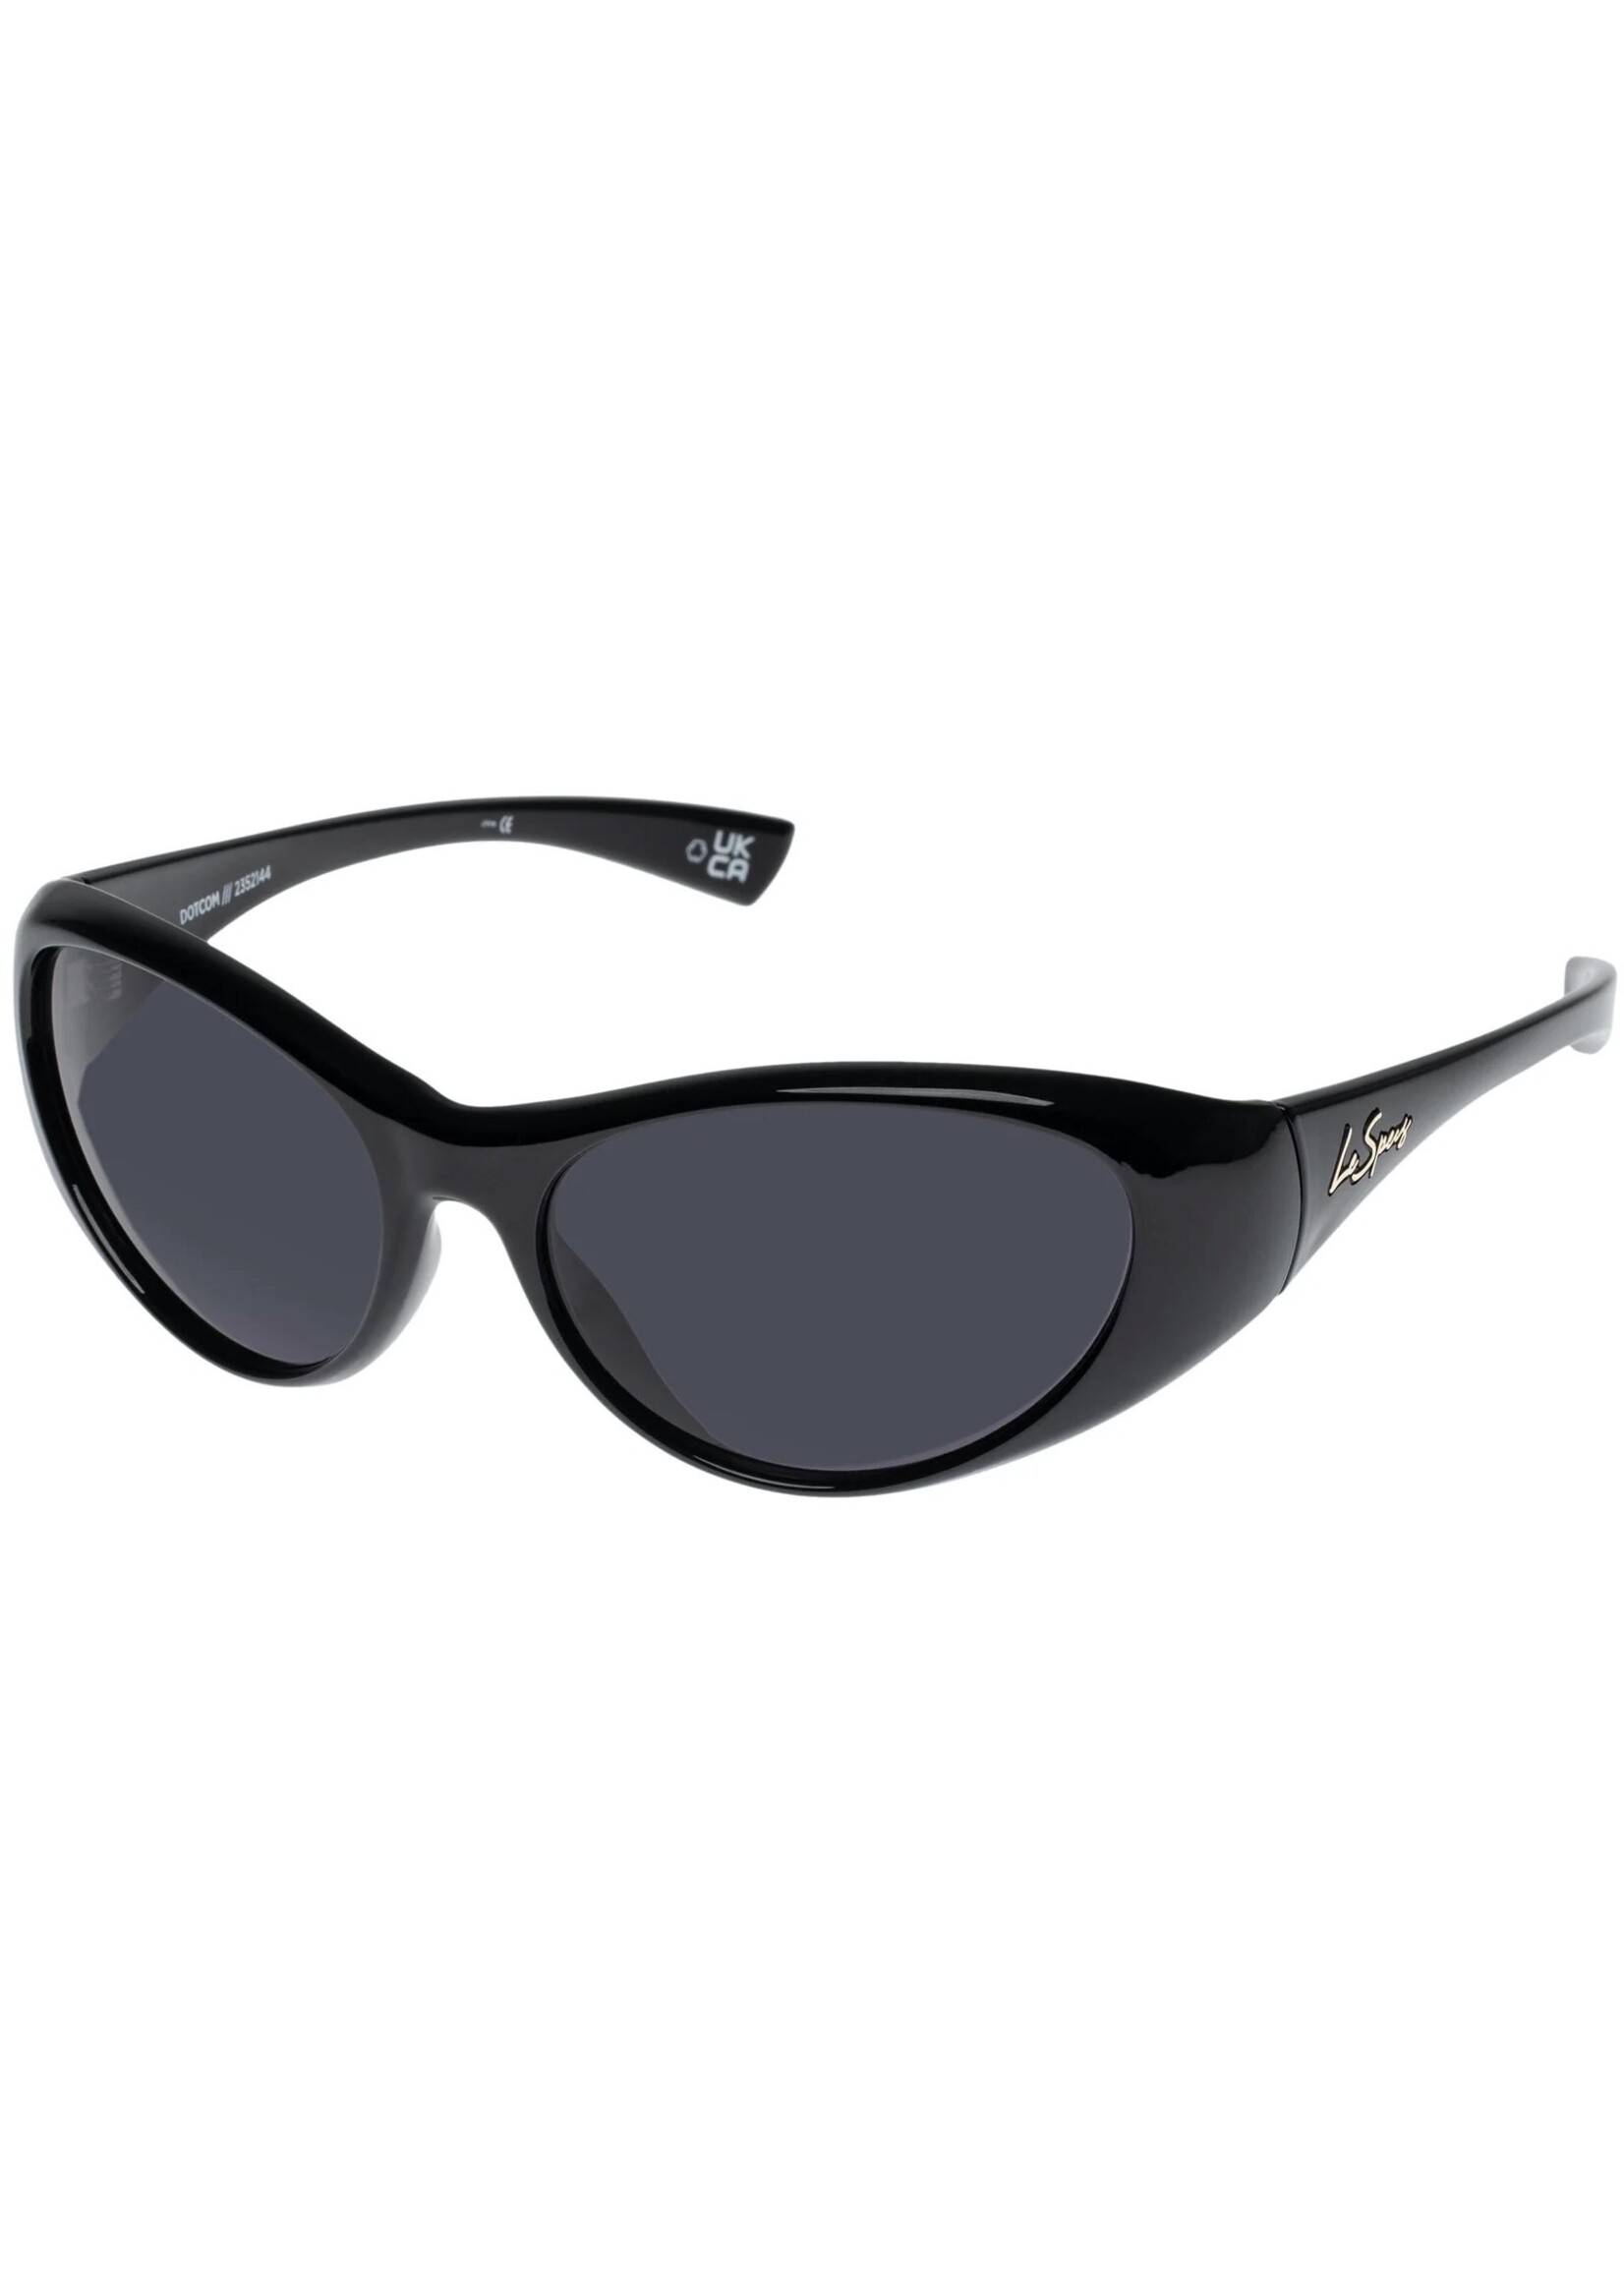 Le Specs Sunglasses "Dotcom" by LESPECS